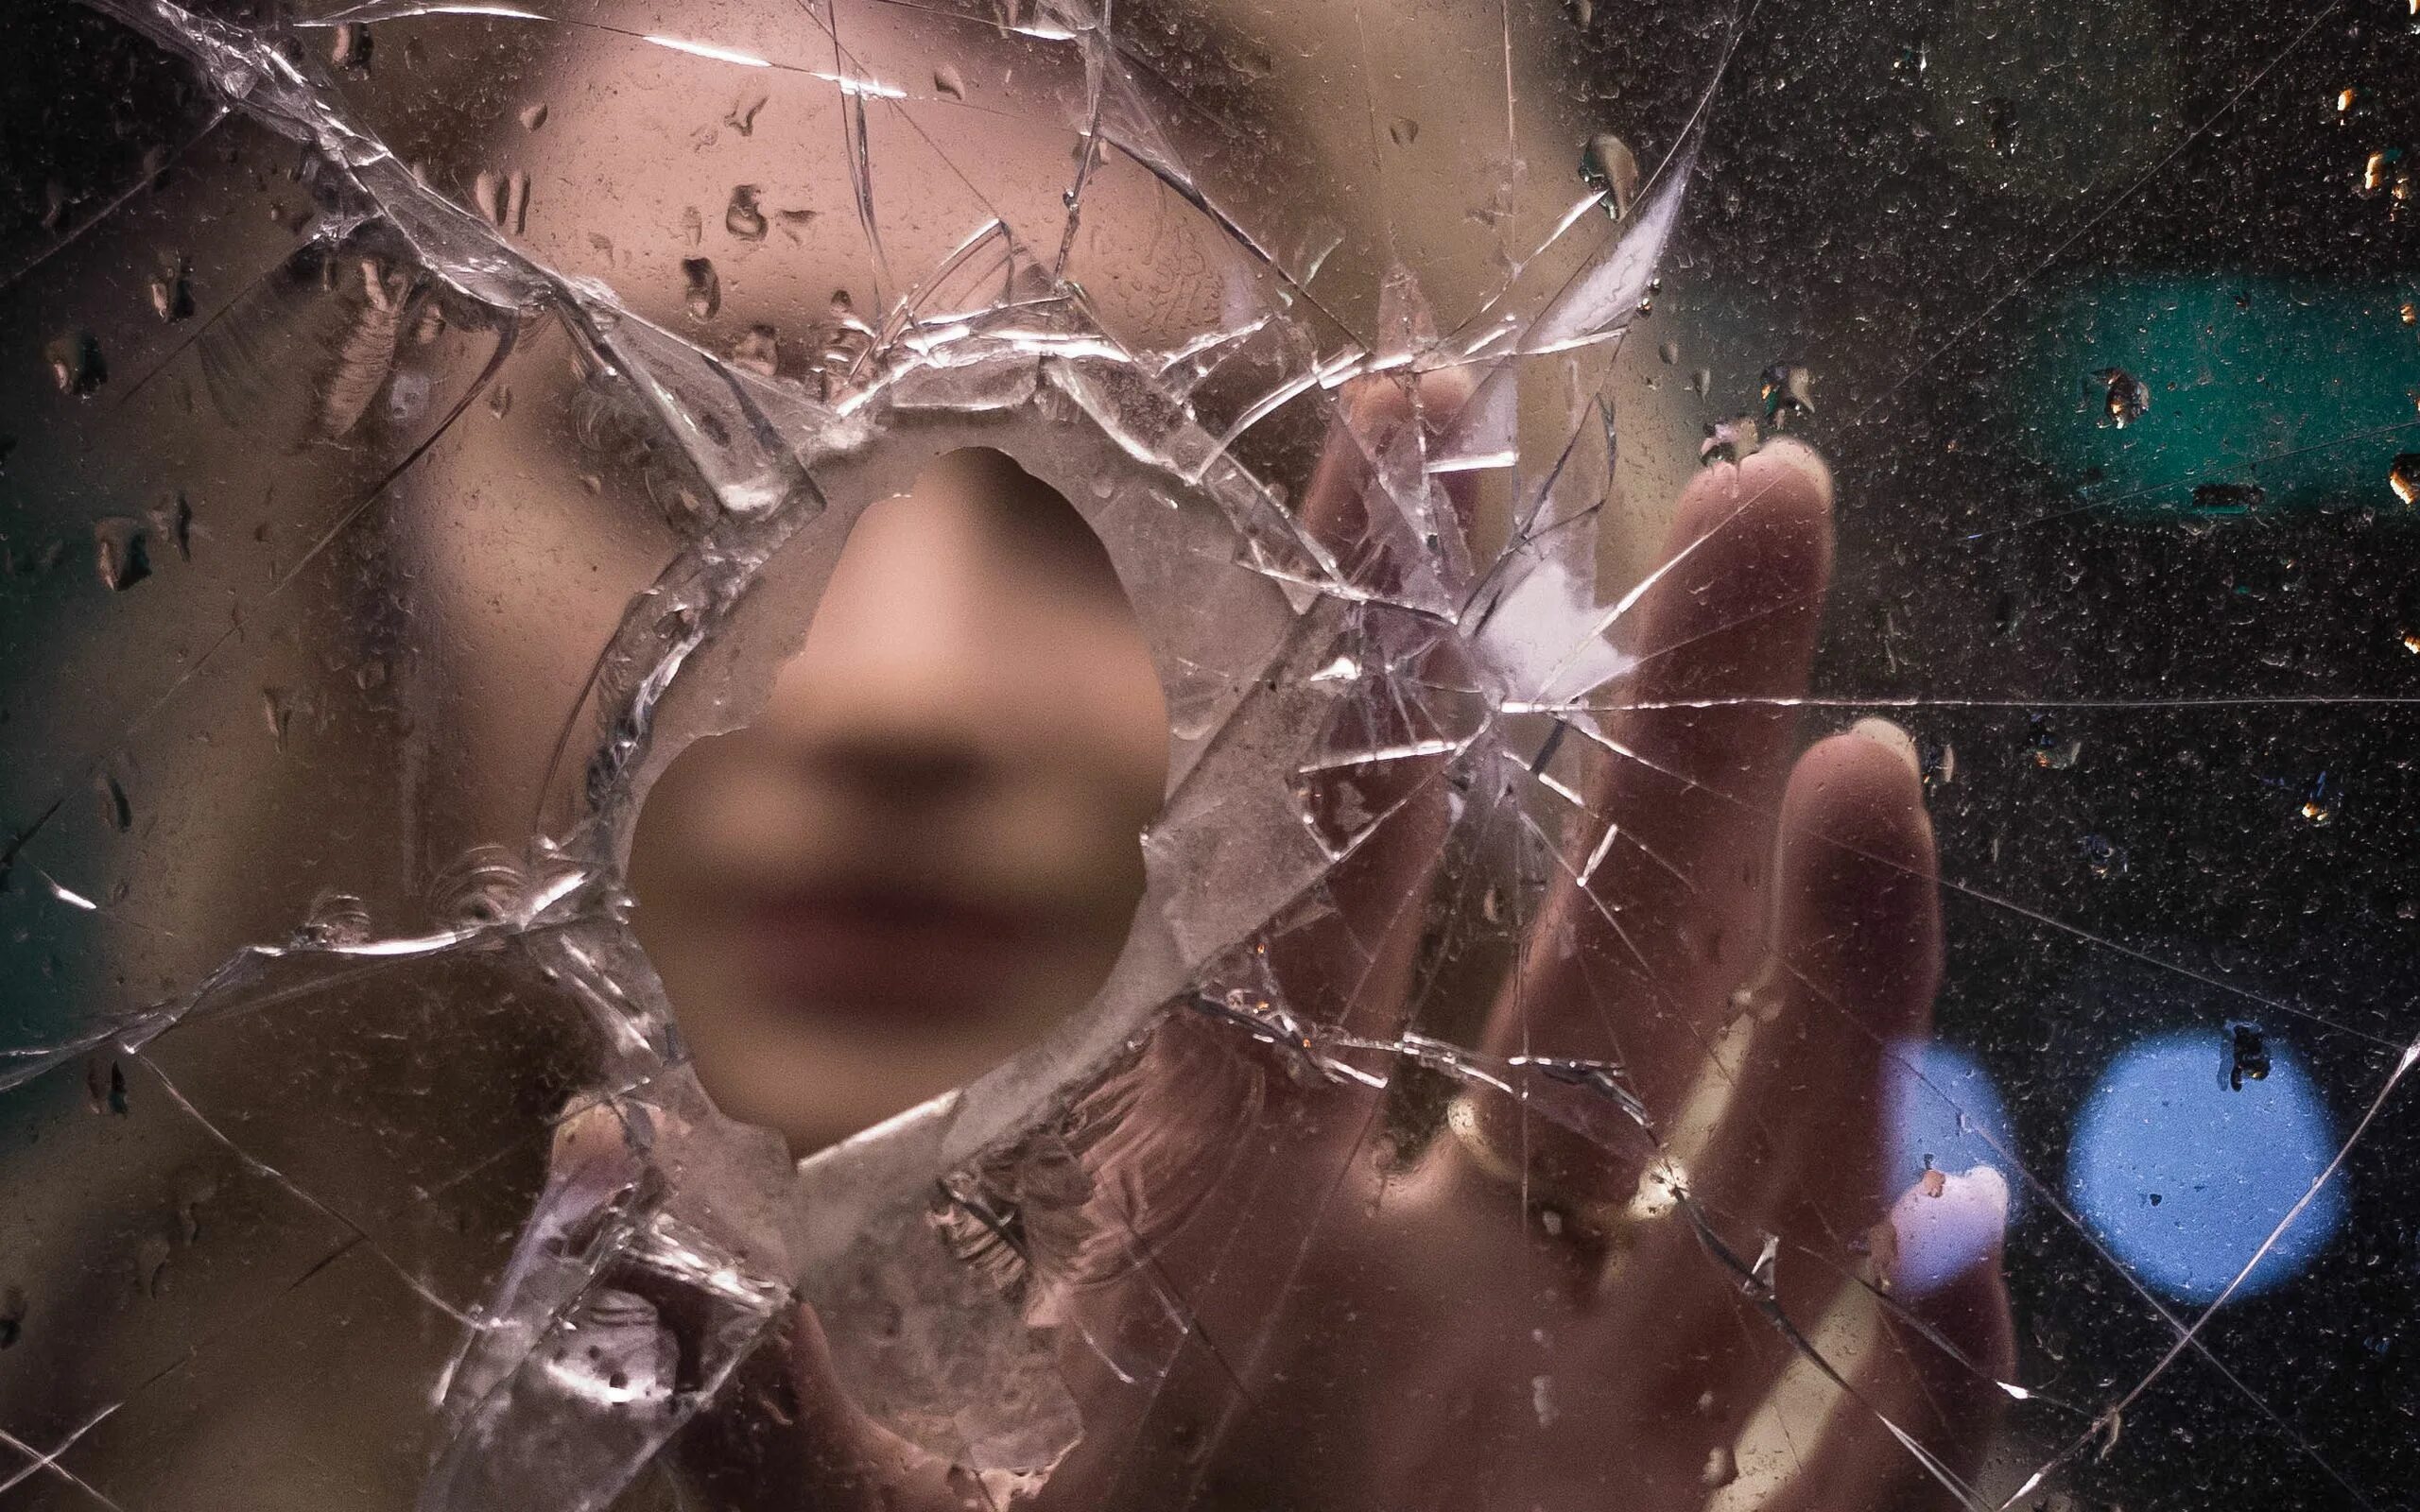 Разбитое стекло. Девушка в разбитом зеркале. Фотосессия с разбитым стеклом.